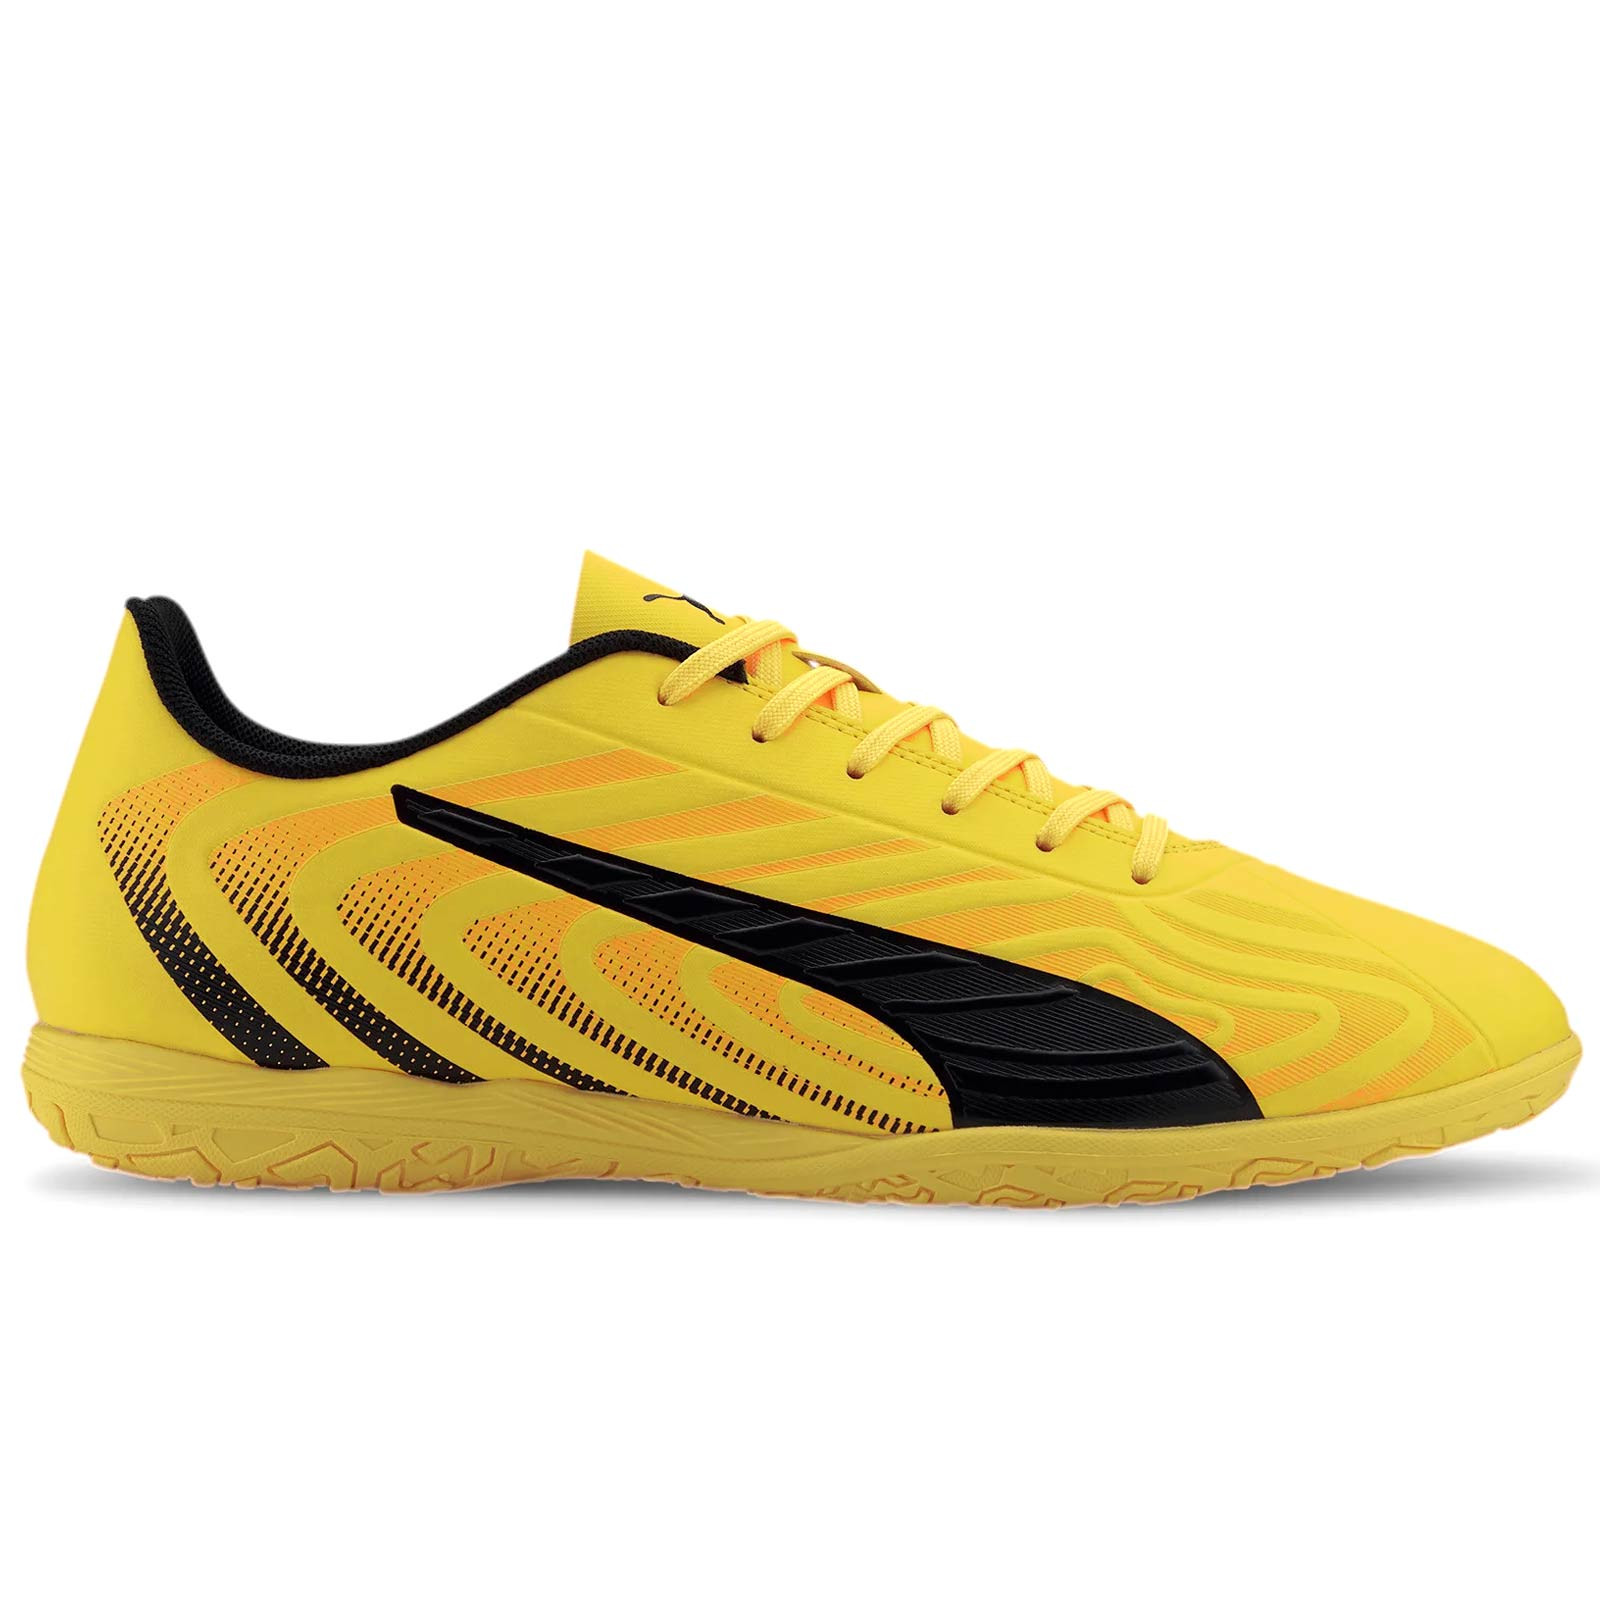 Puma One 20.4 IT amarillas | futbolmania